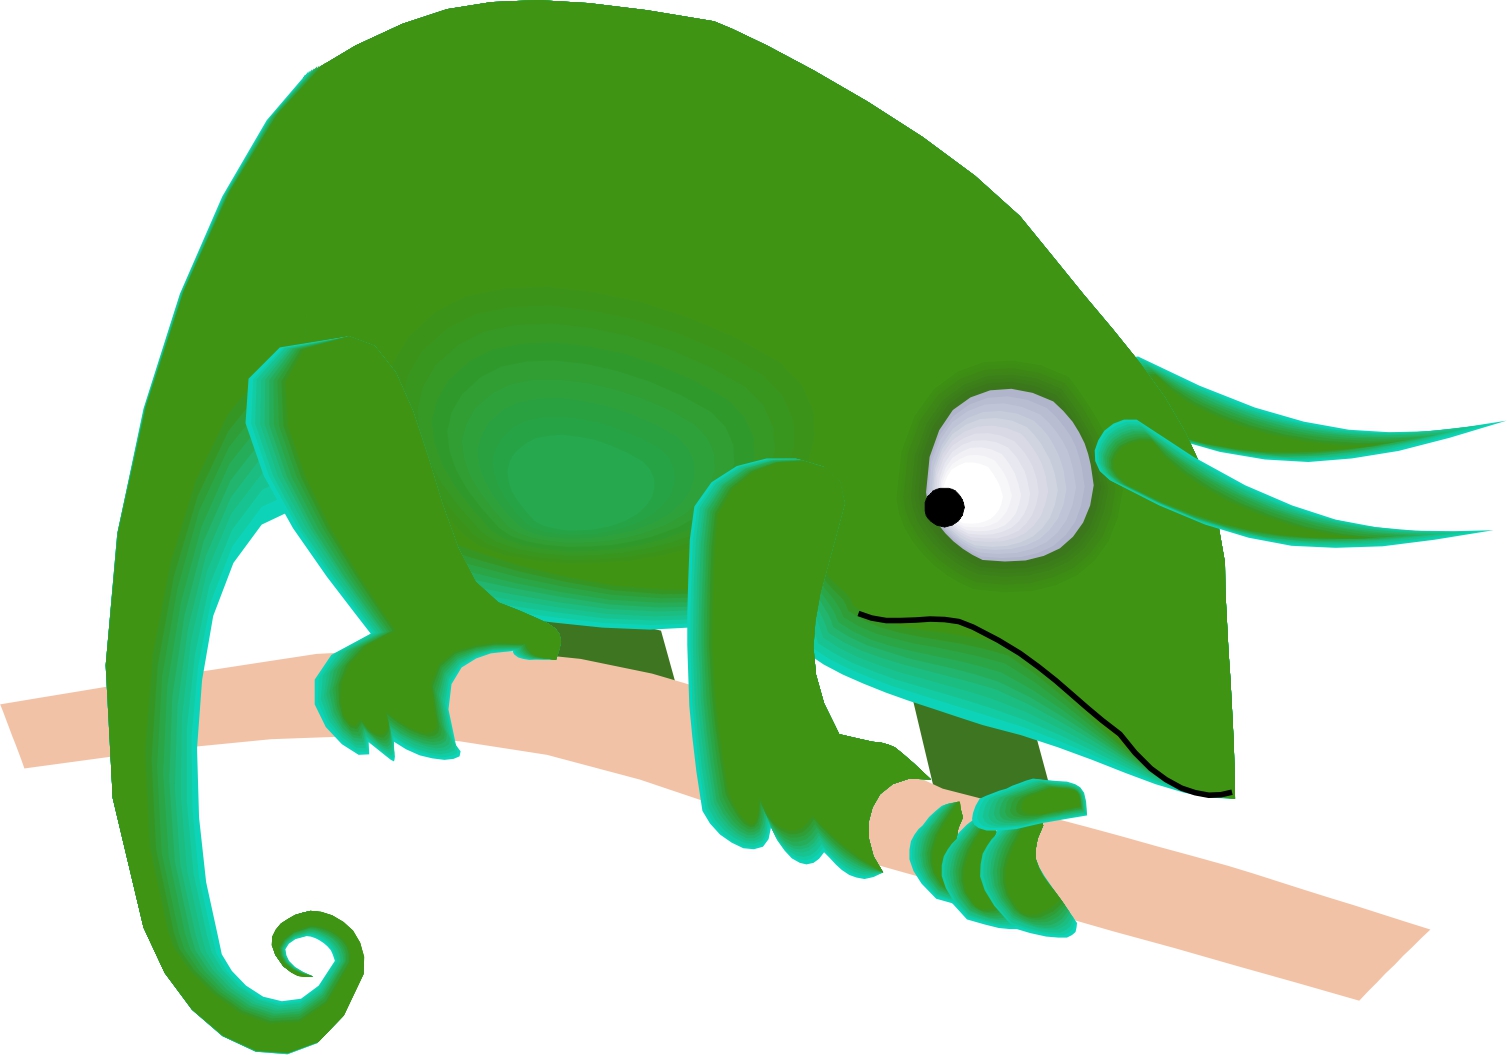 Chameleon Cartoon Pictures